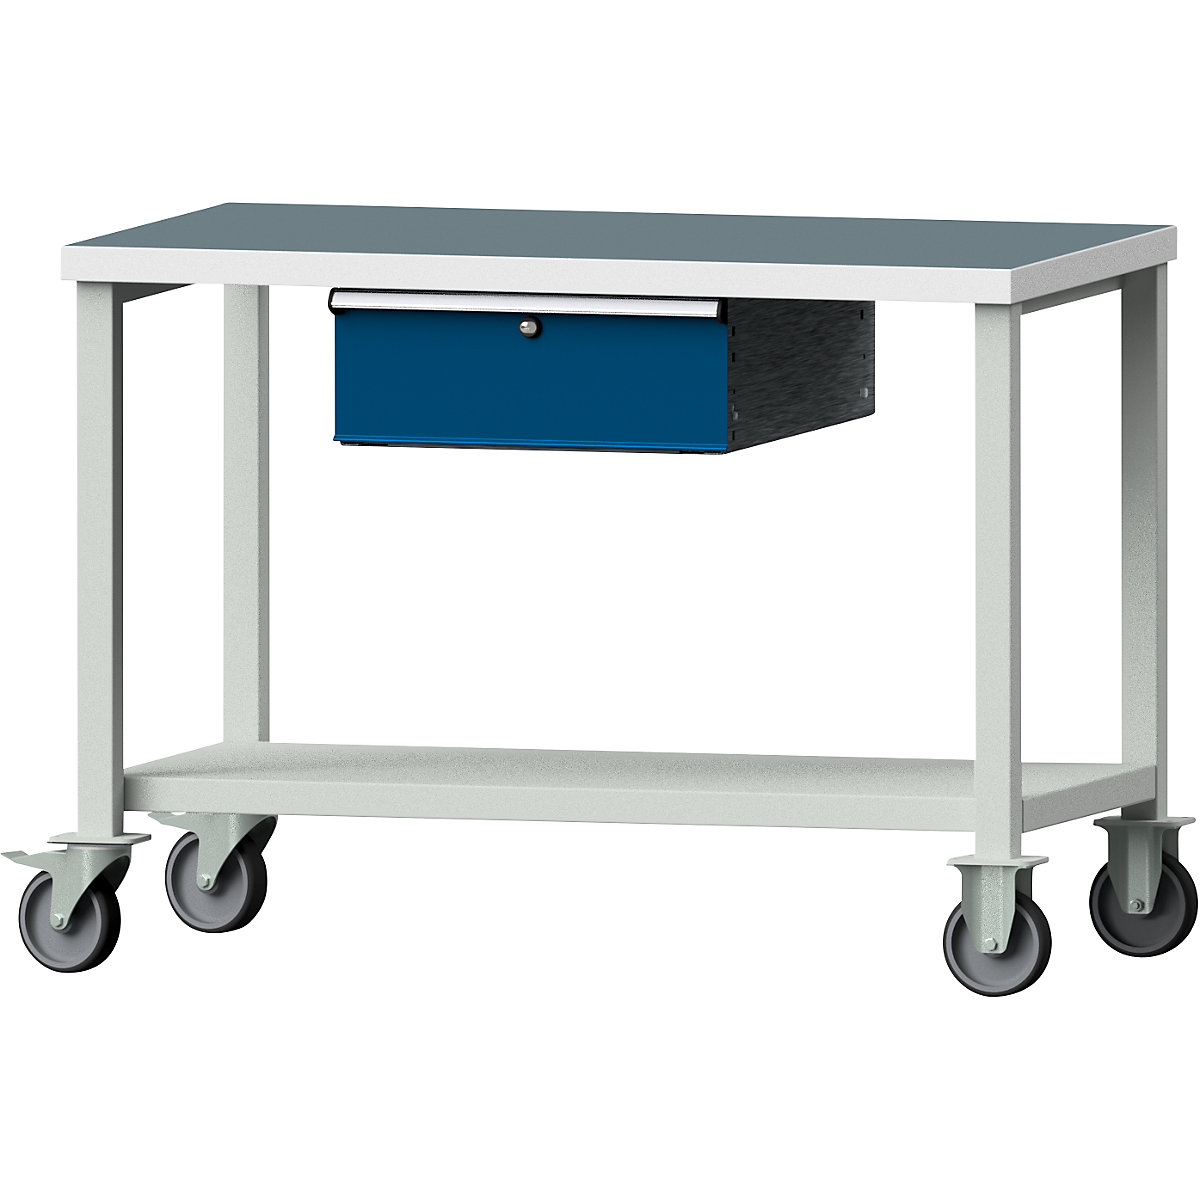 Compact workbench – ANKE, WxD 1140 x 650 mm, 1 drawer, mobile, universal worktop-2